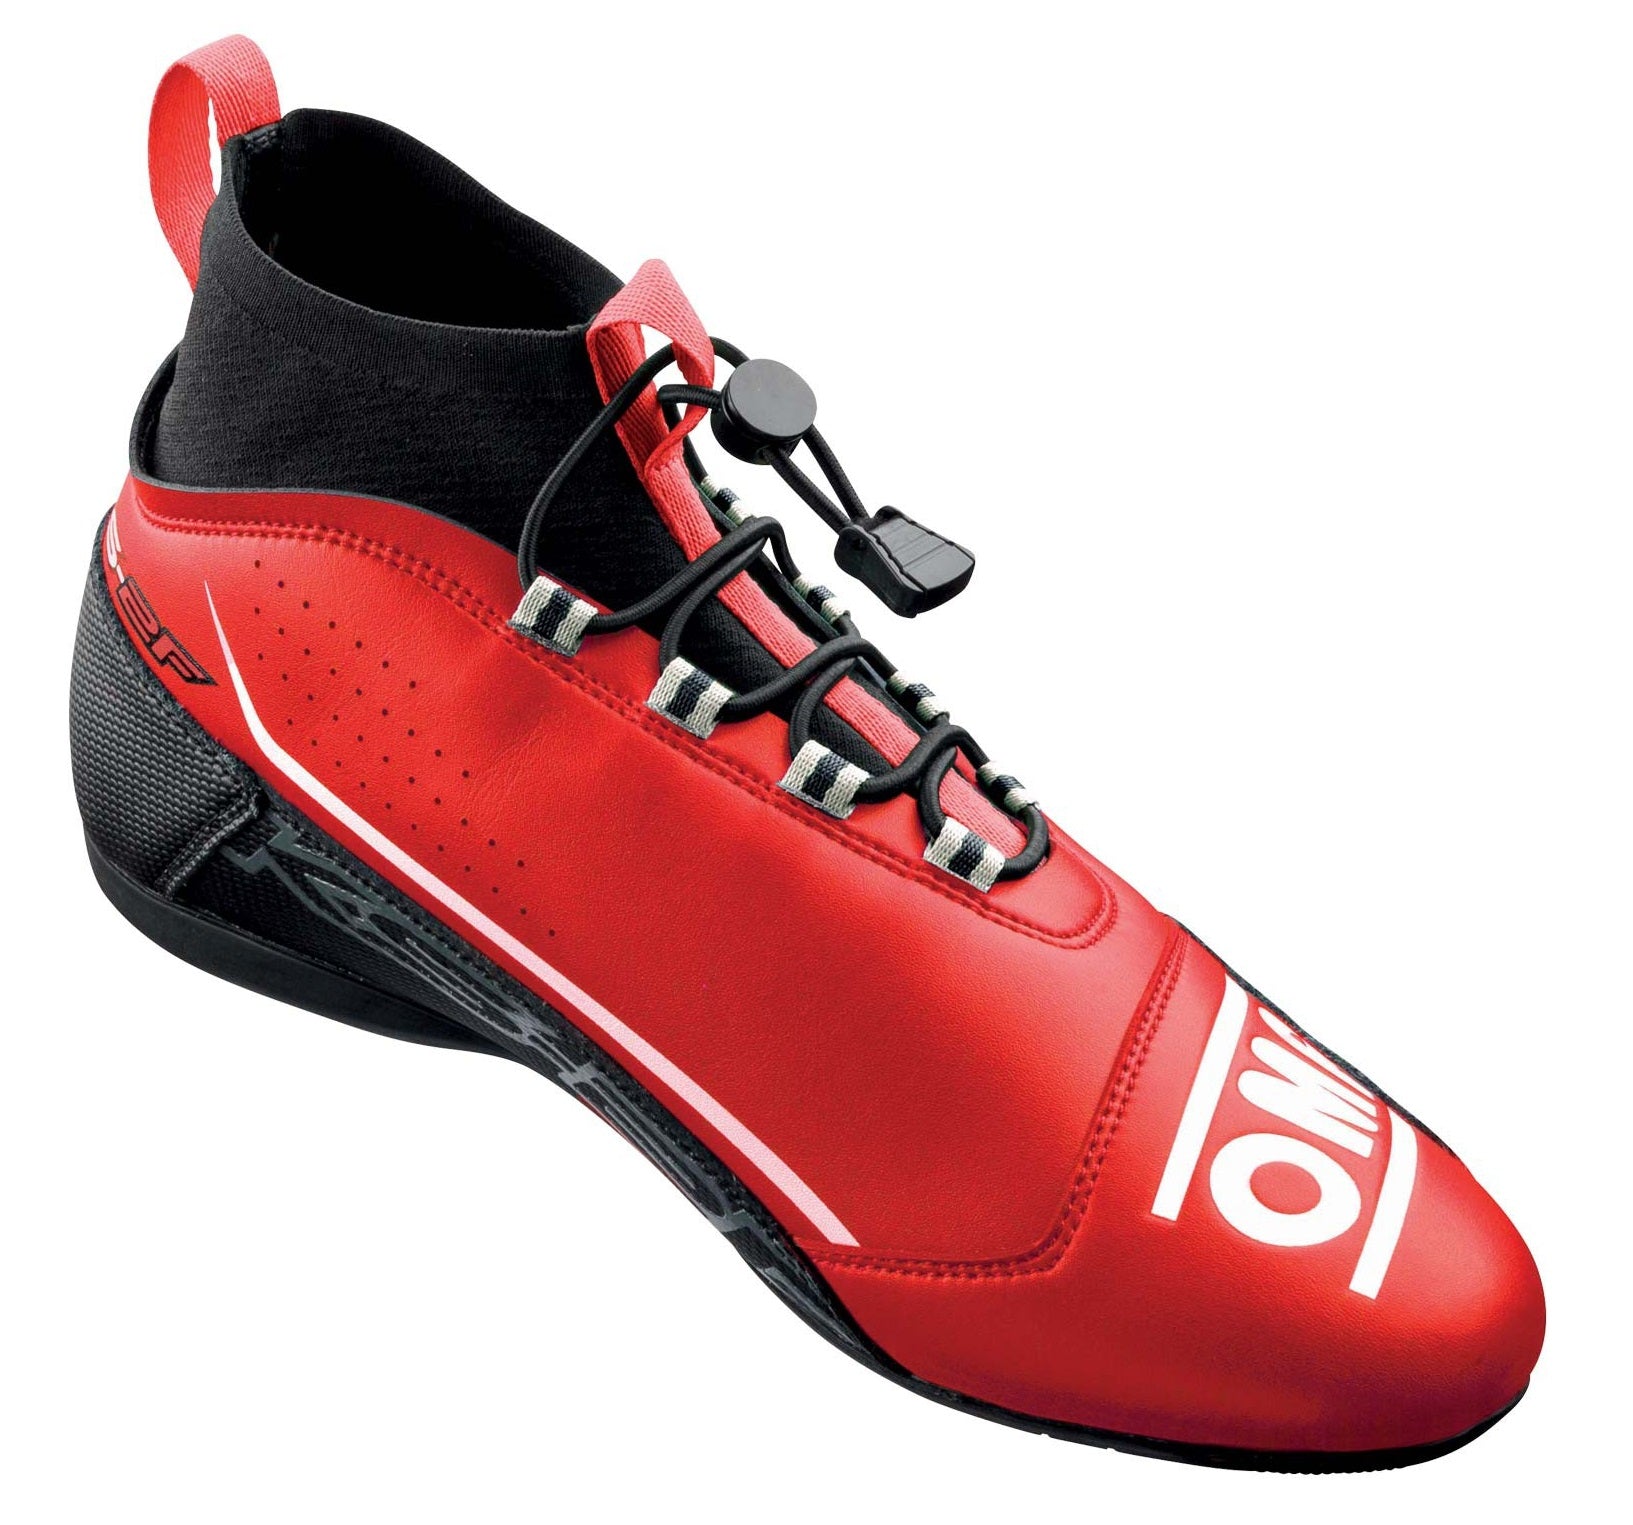 OMP KC0-0830-A01-060-36 KS-2F Karting shoes, red/black, size 36 Photo-1 